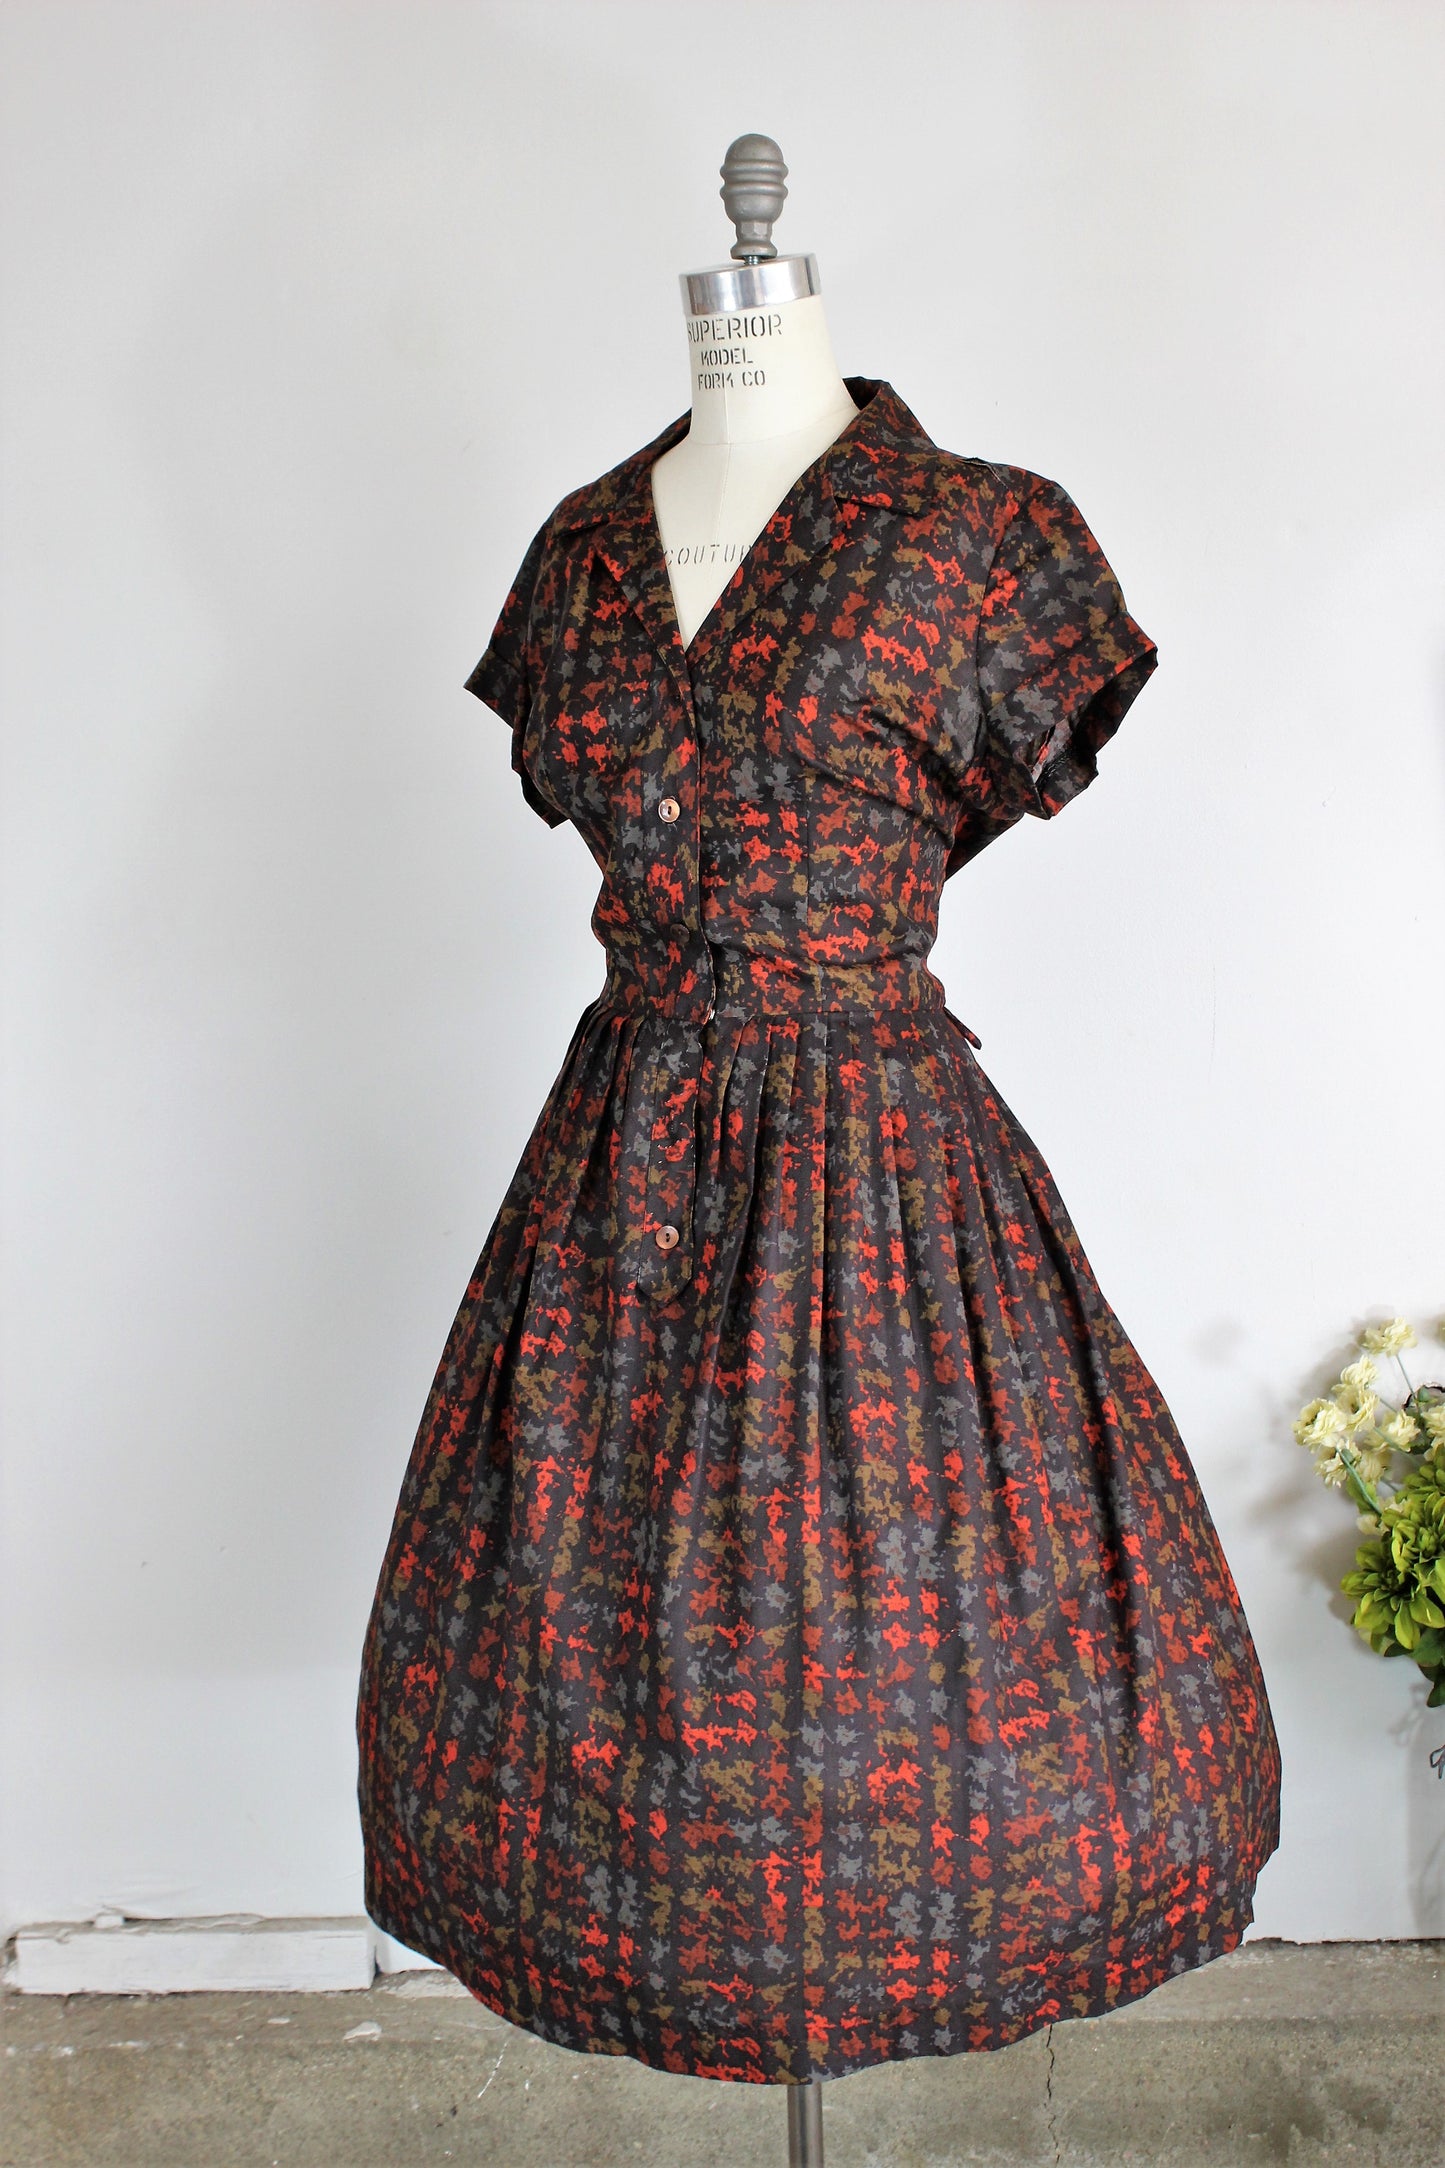 Vintage 1950s Shirtwaist Dress by Fashion First